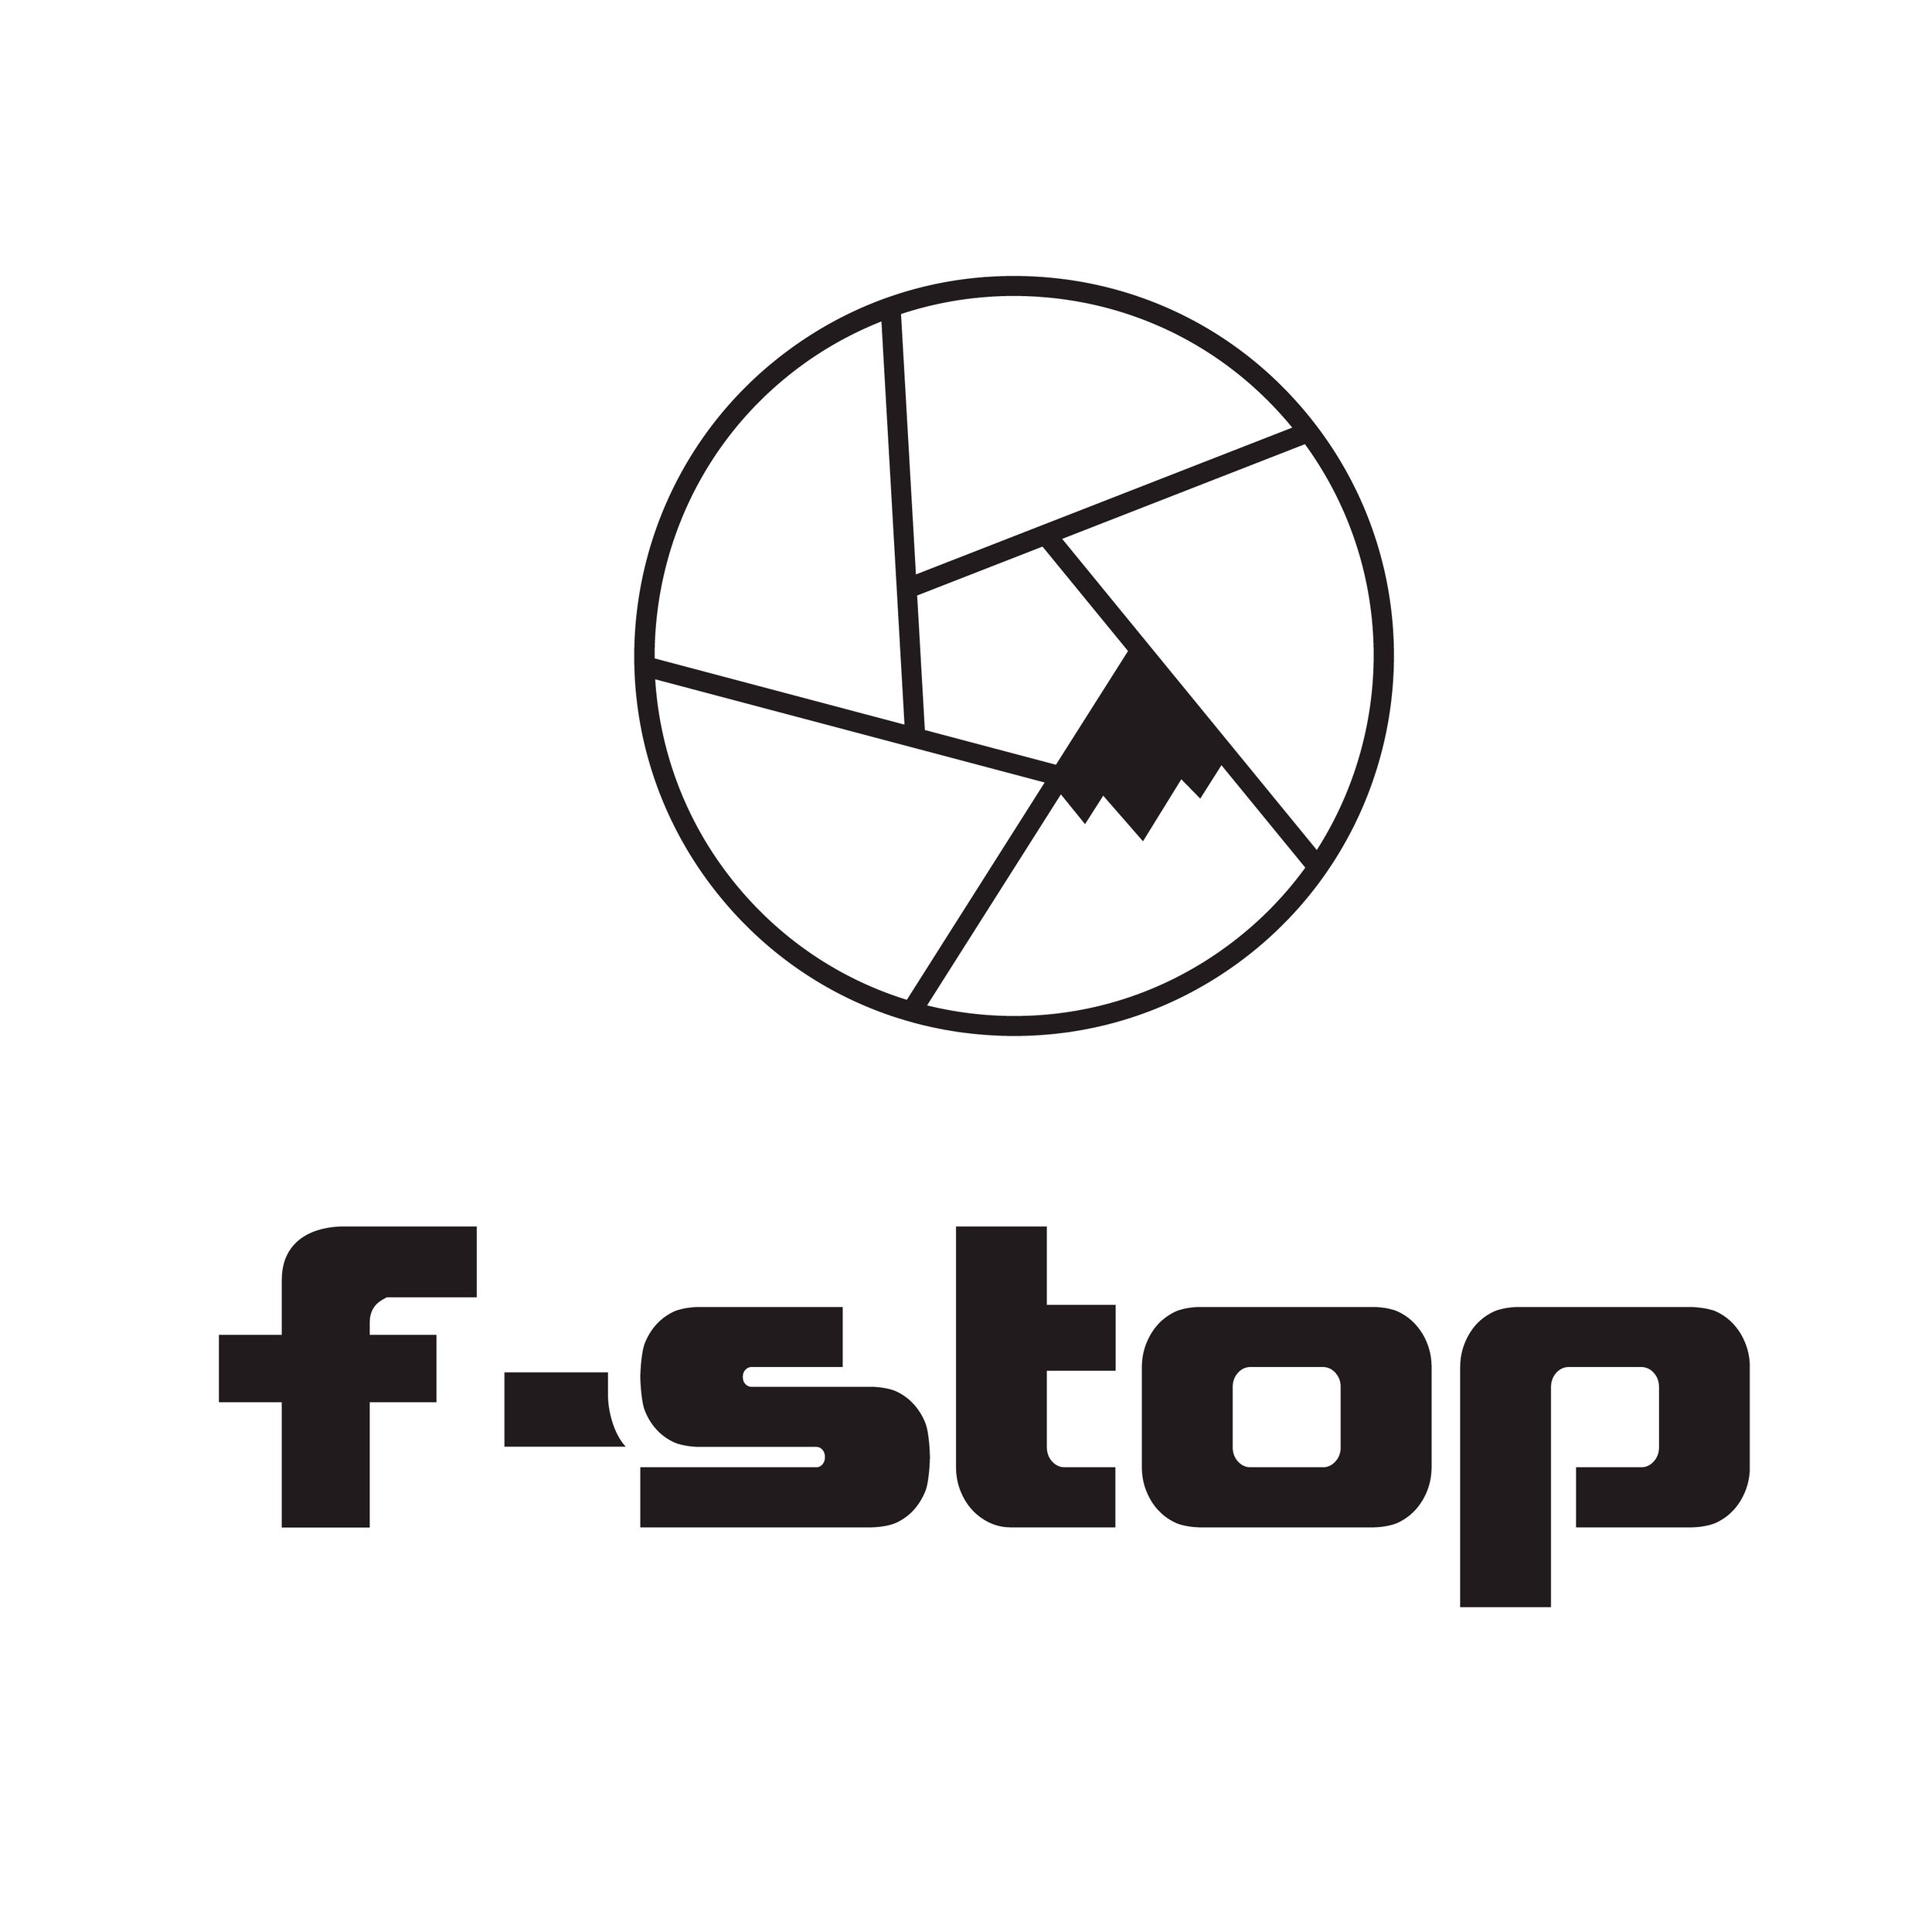 fstop_logo_stacked_black.jpeg